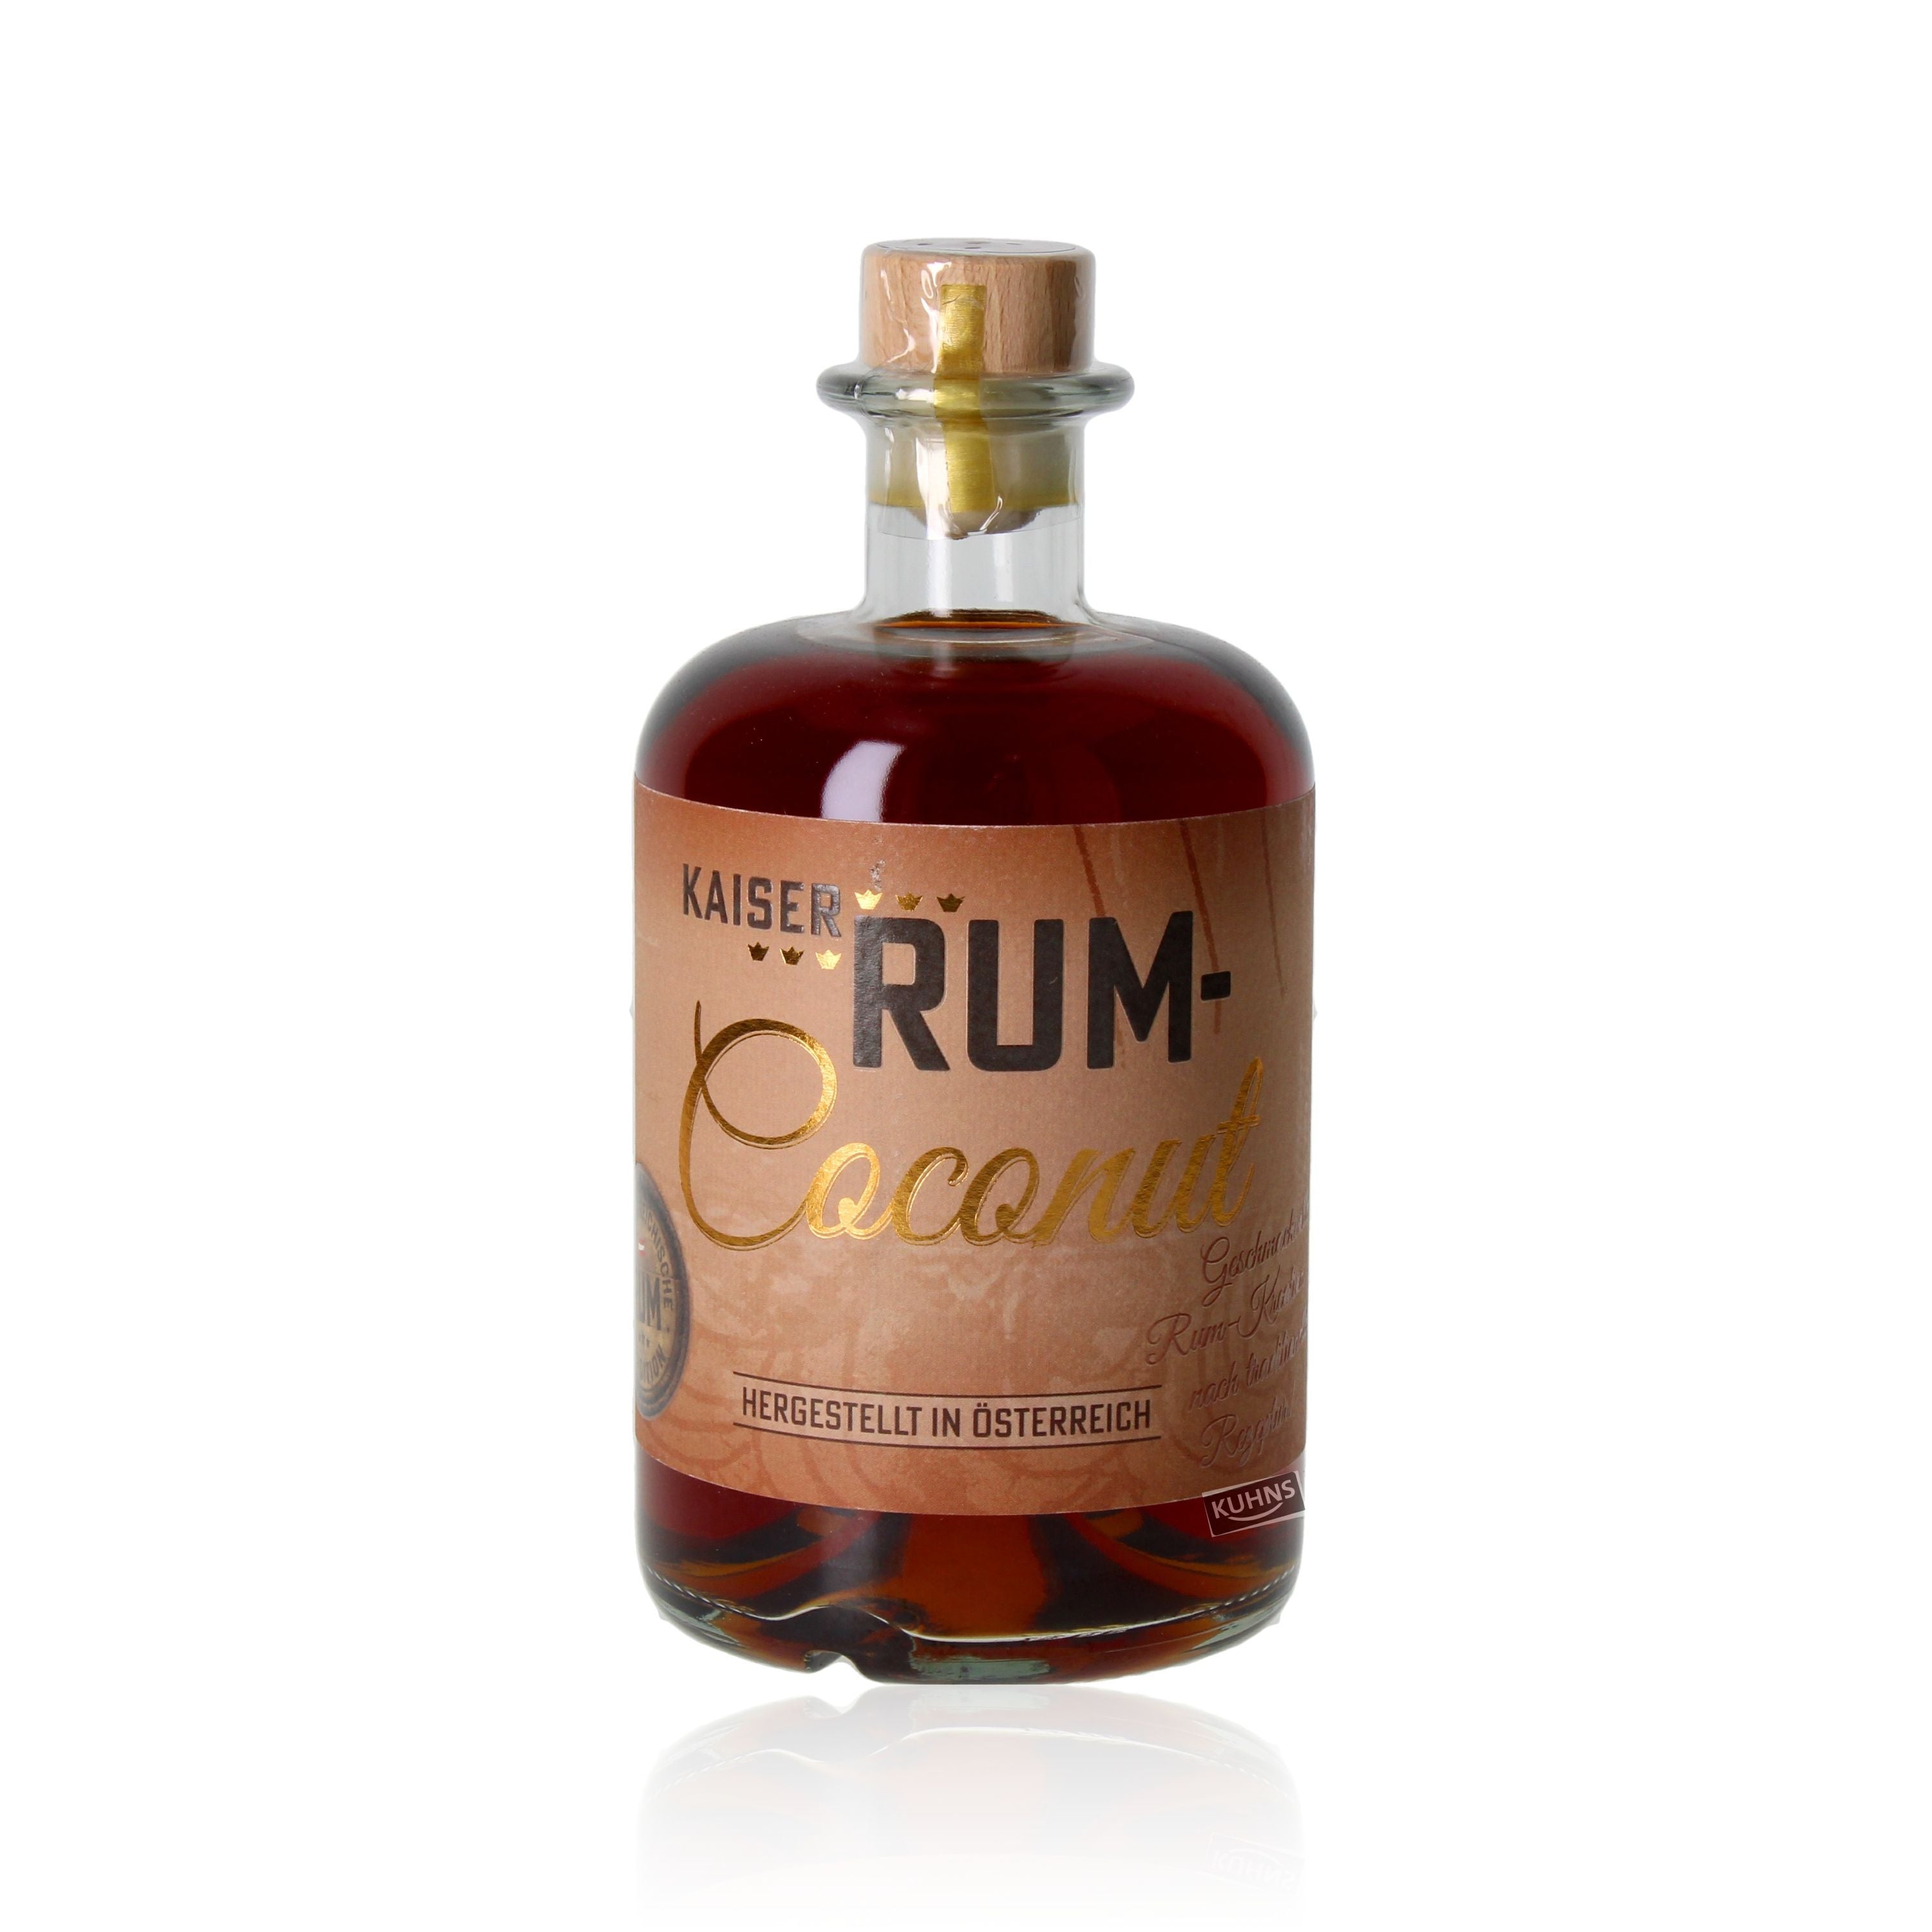 Prinz Coconut Rum 0.5l, alc. 40% by volume 